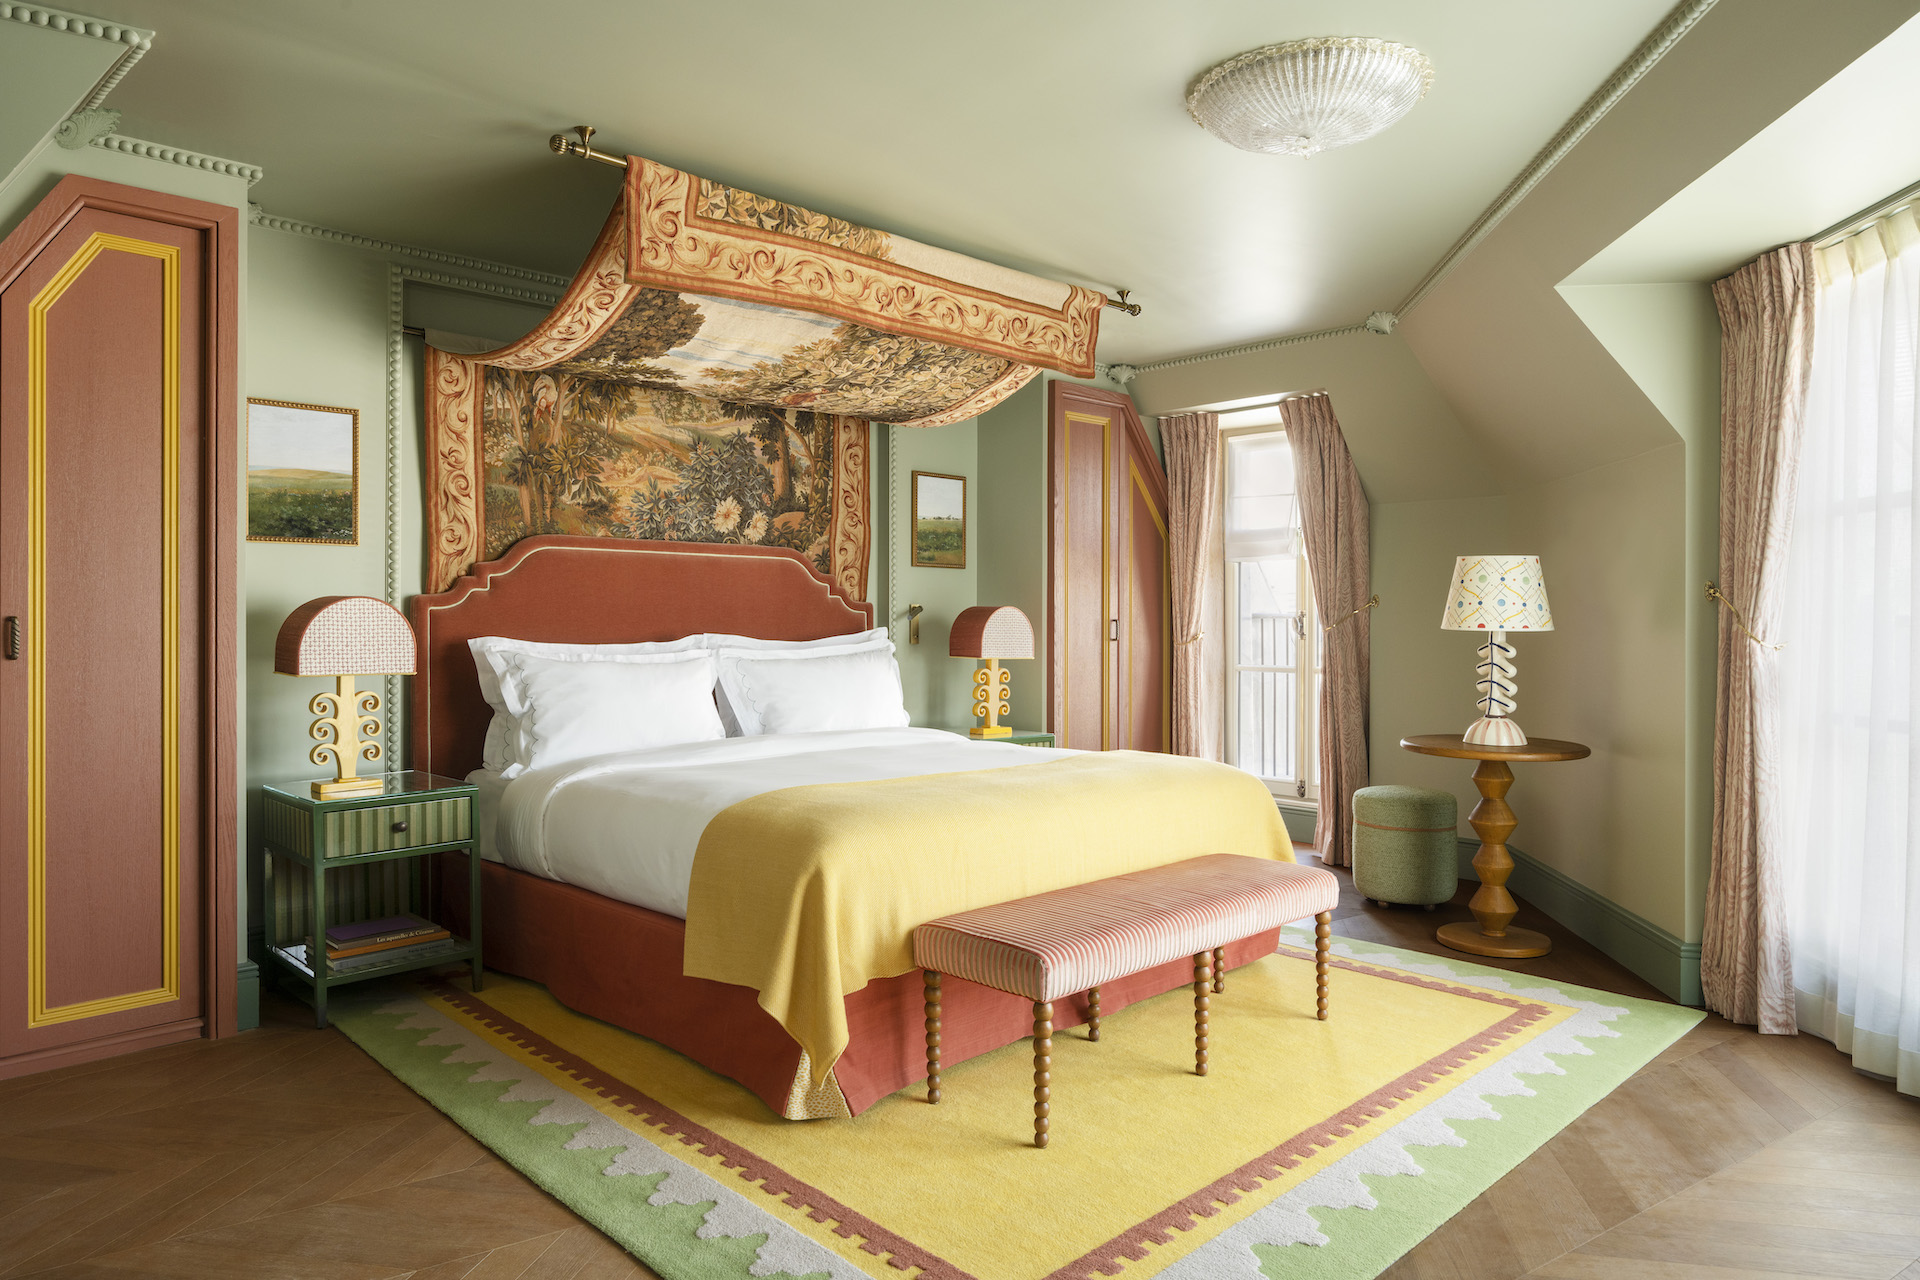 Le Grand Mazarin: Paris’s Flamboyant New Hotel Makes a Fabulous Base